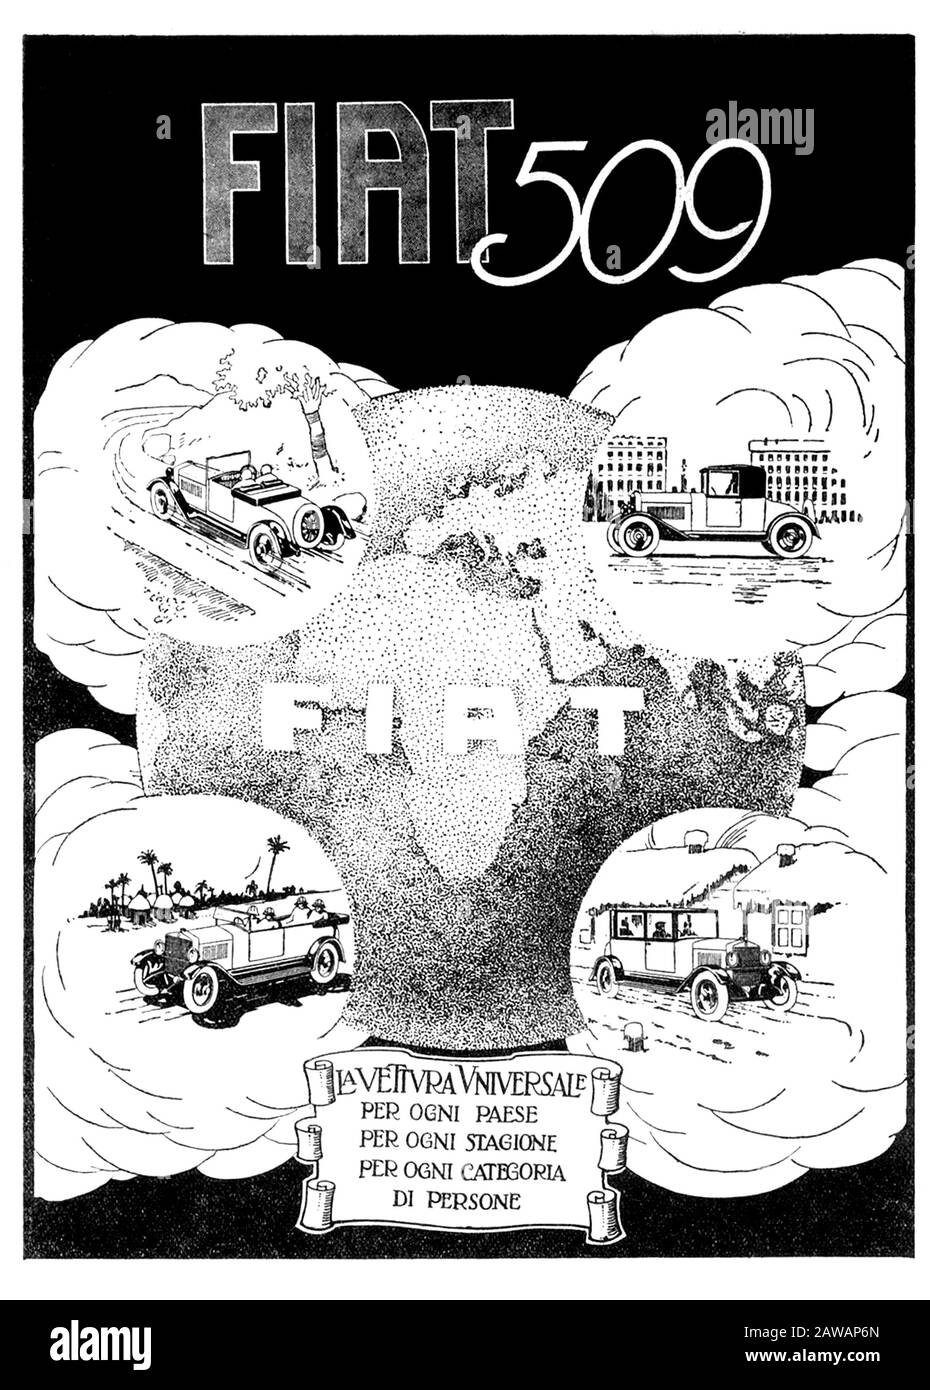 1926 , ITALY : The italian car industry FIAT ( F.I.A.T. Fabbrica Italiana Automobili Torino ) advertising for FIAT 509 model  - GIANNI AGNELLI - autom Stock Photo